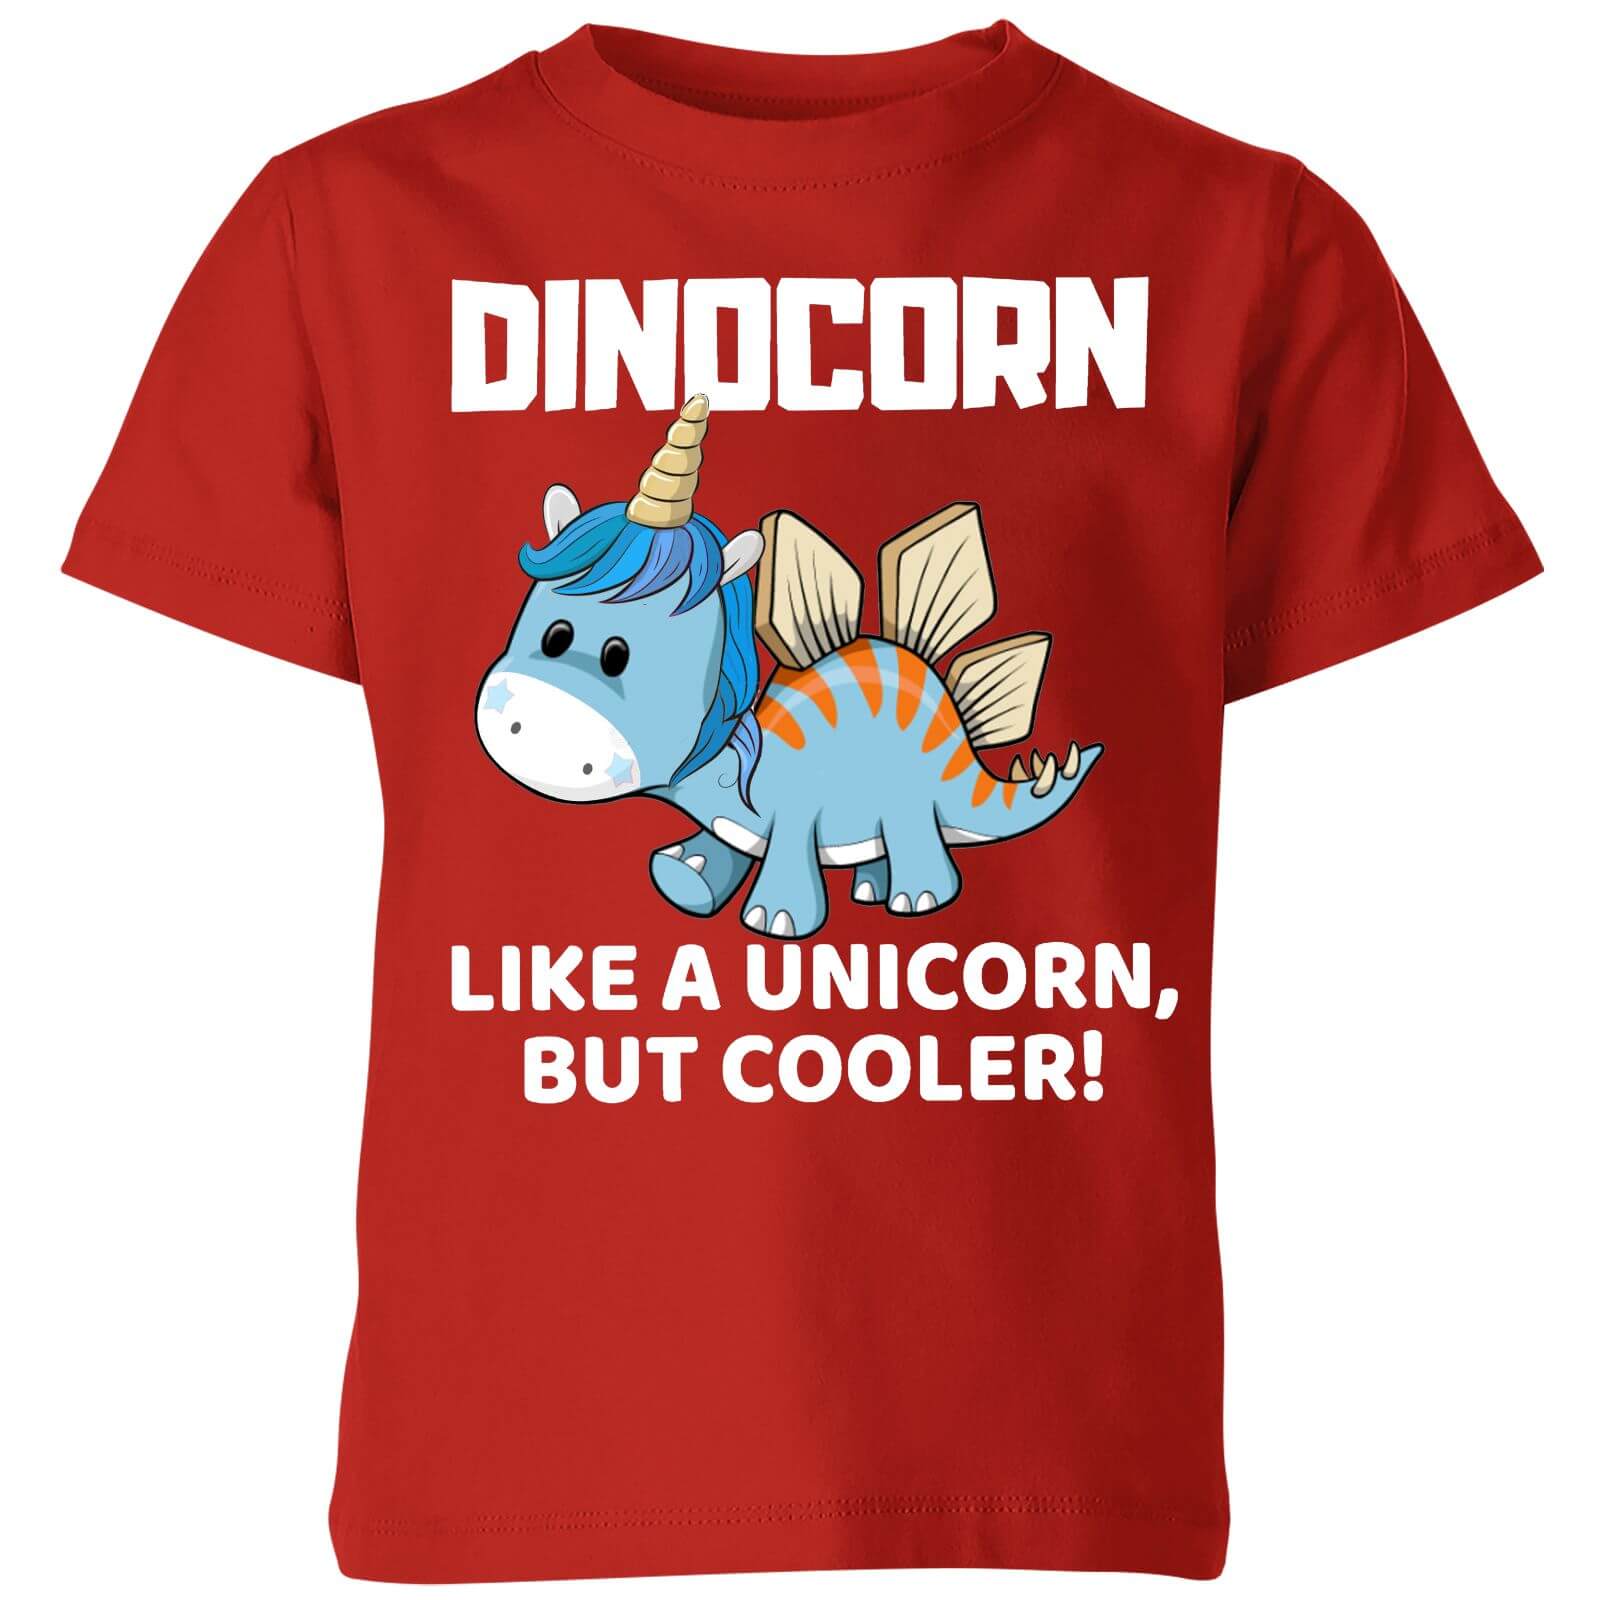 Big and Beautiful Dinocorn Kids' T-Shirt - Red - 3-4 Years - Red